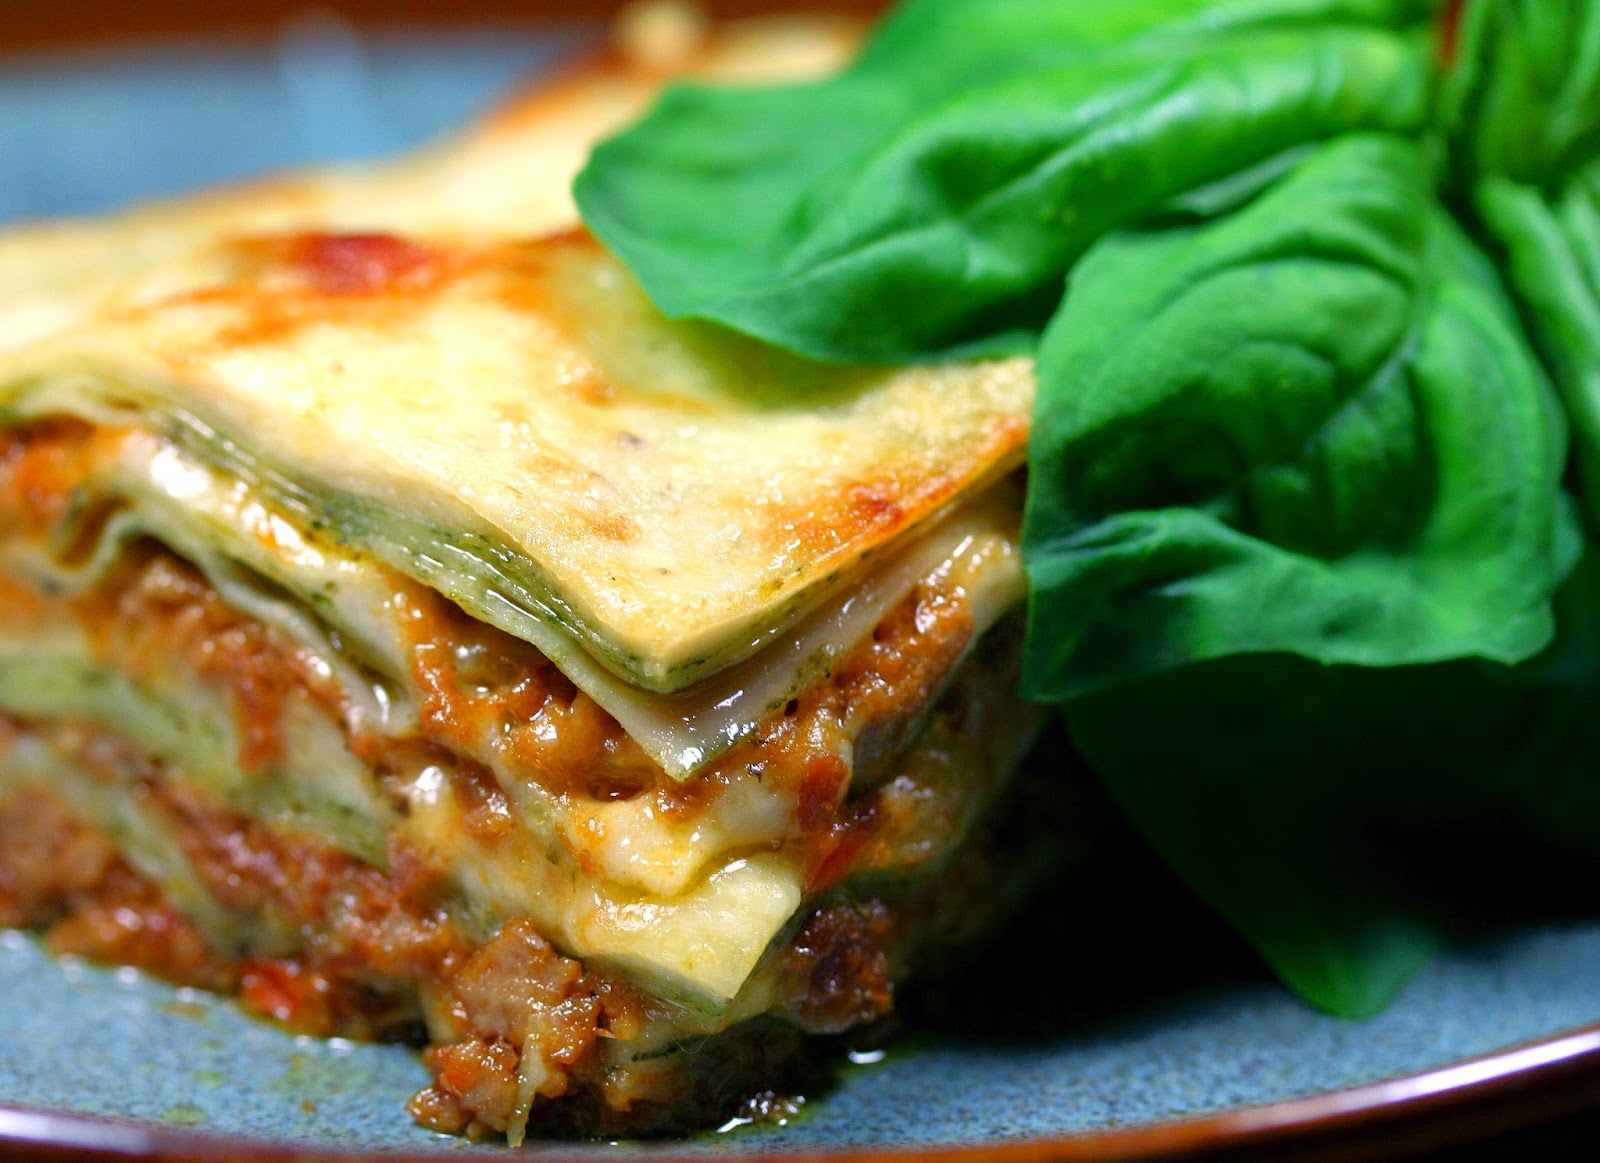 Culturally Confused: The Splendid Table: Lasagne of Emilia-Romagna